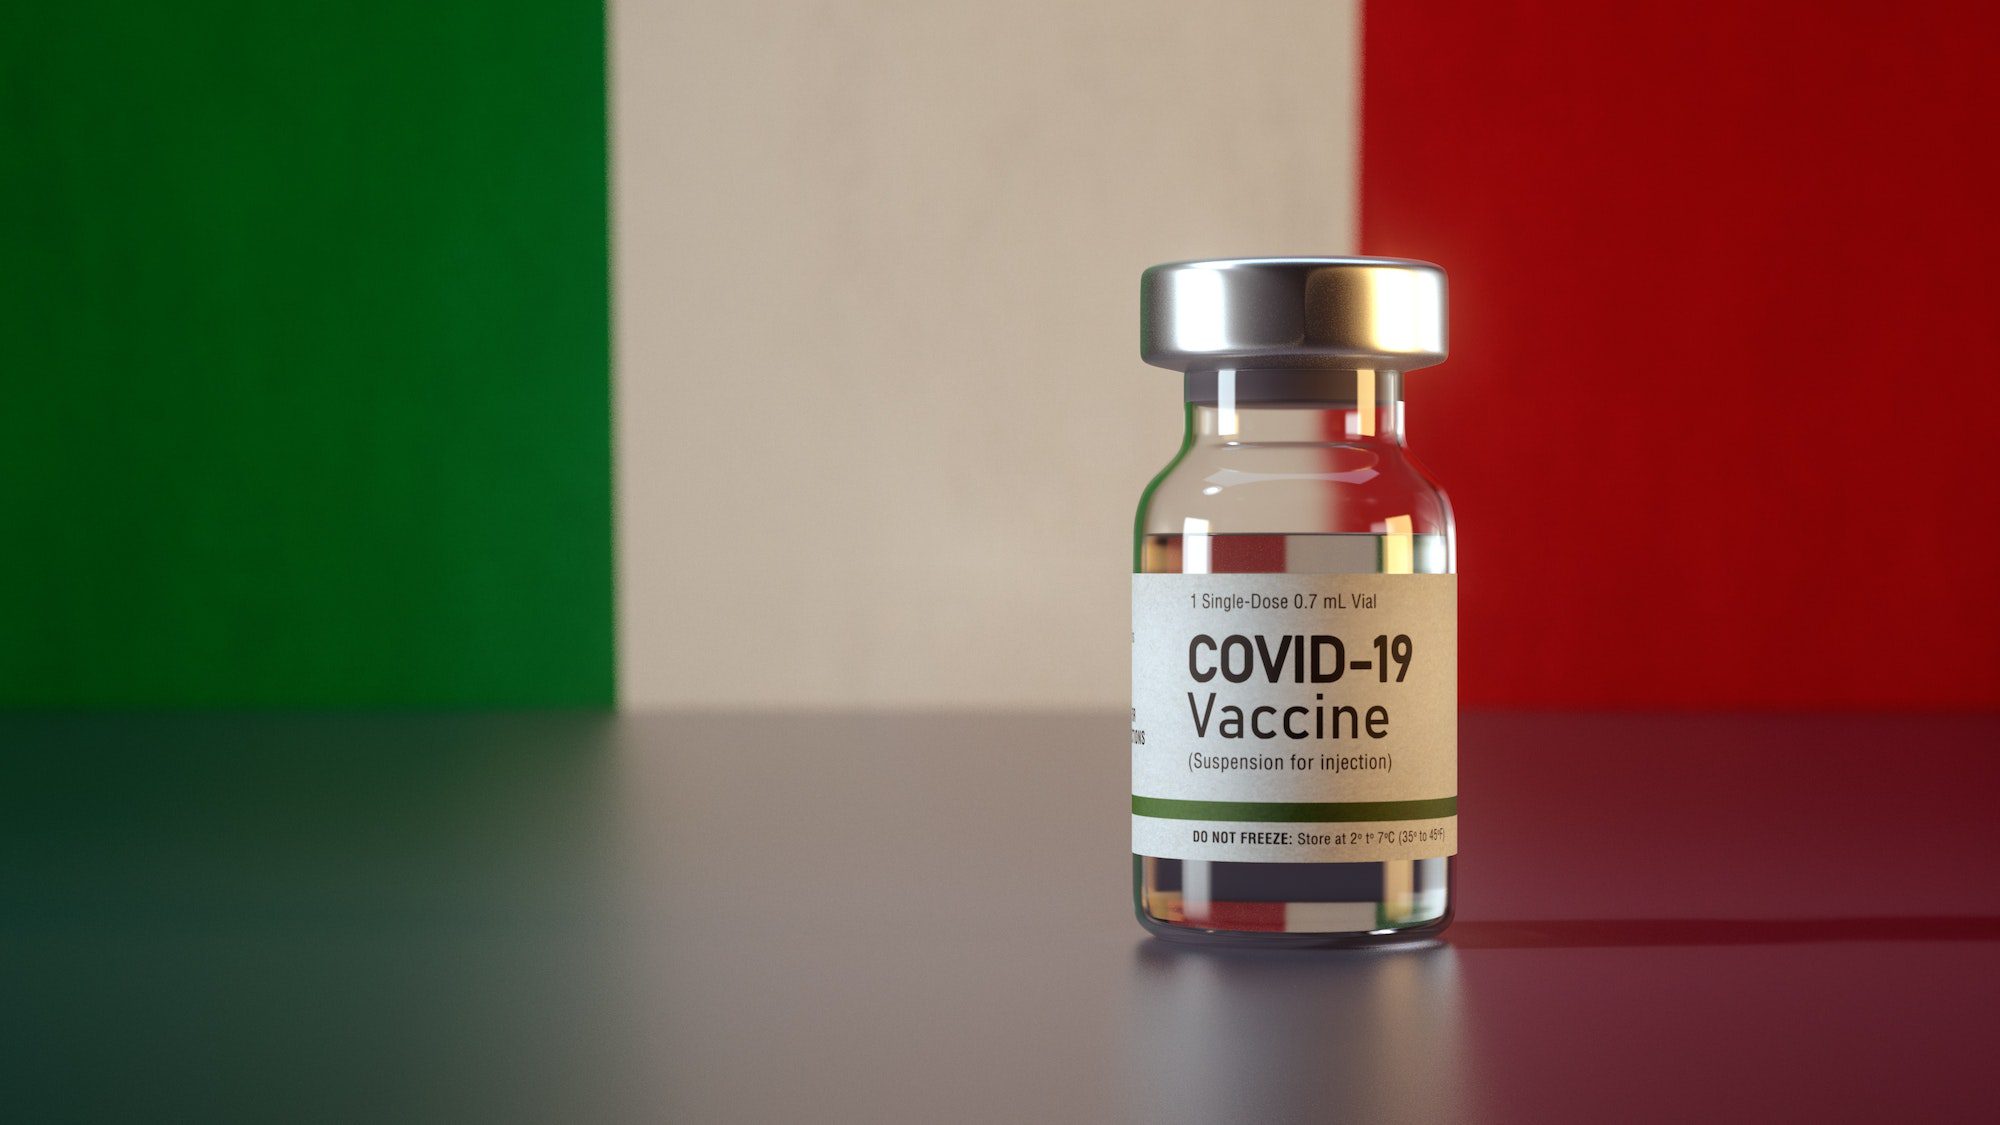 Corona Vaccine / Covid Vaccine Ampule / Vaccination in Italy Flag